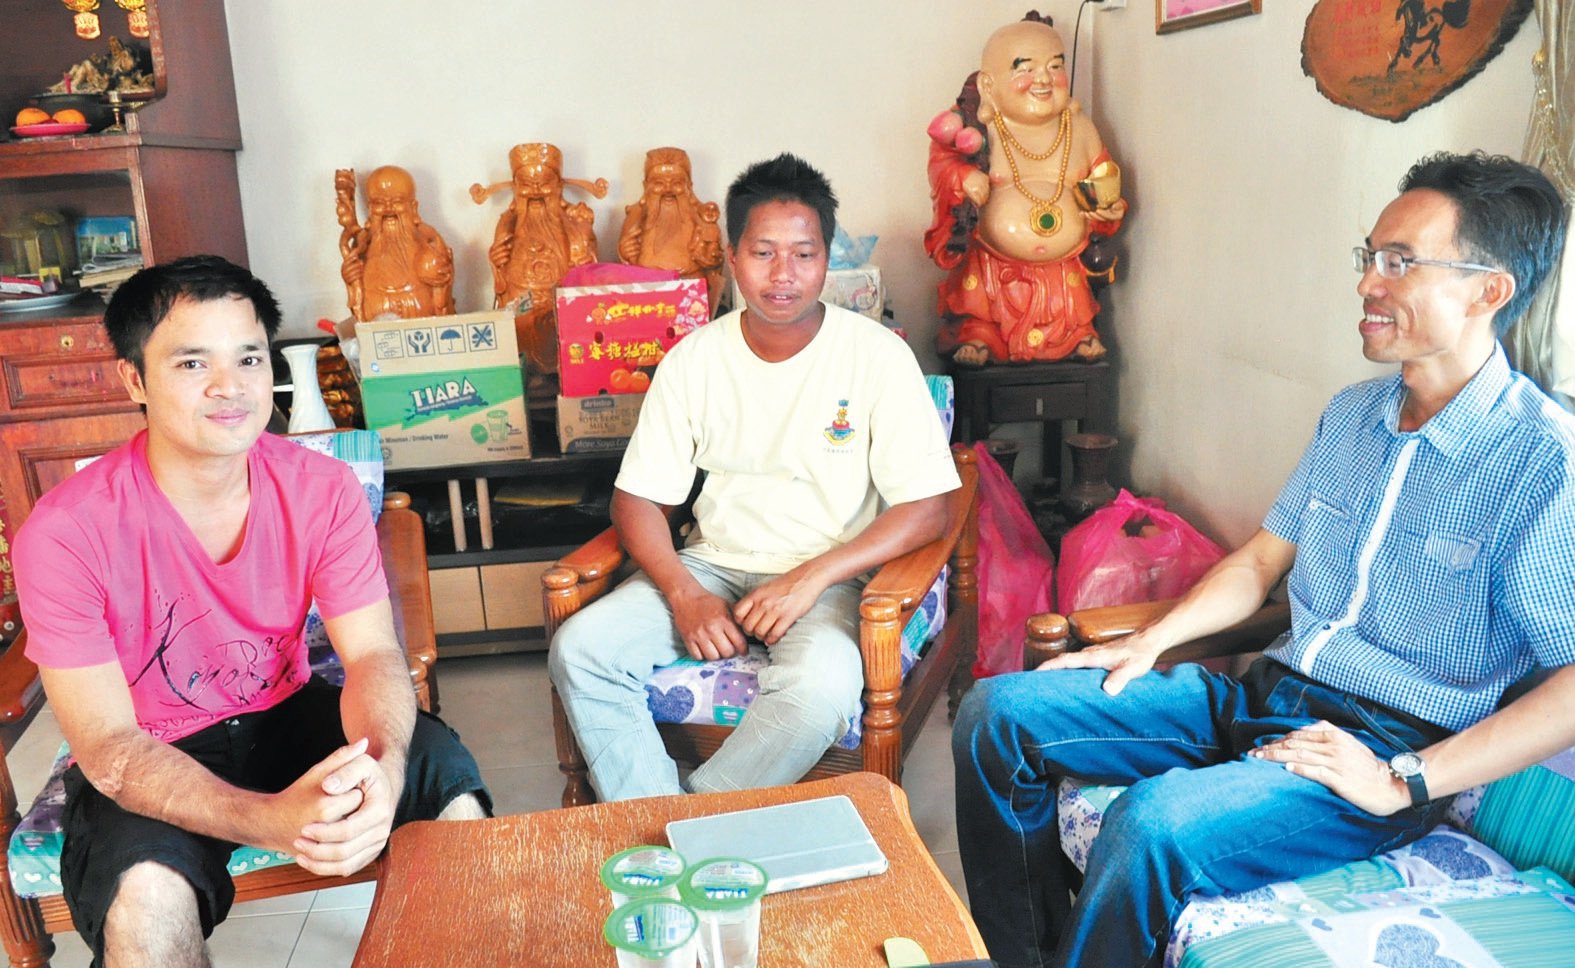 KYI（左起）、昂乃苏及雇主苏建盛一起接受媒体采访，在遇到一些沟通问题时，雇主也顺道协助翻译。